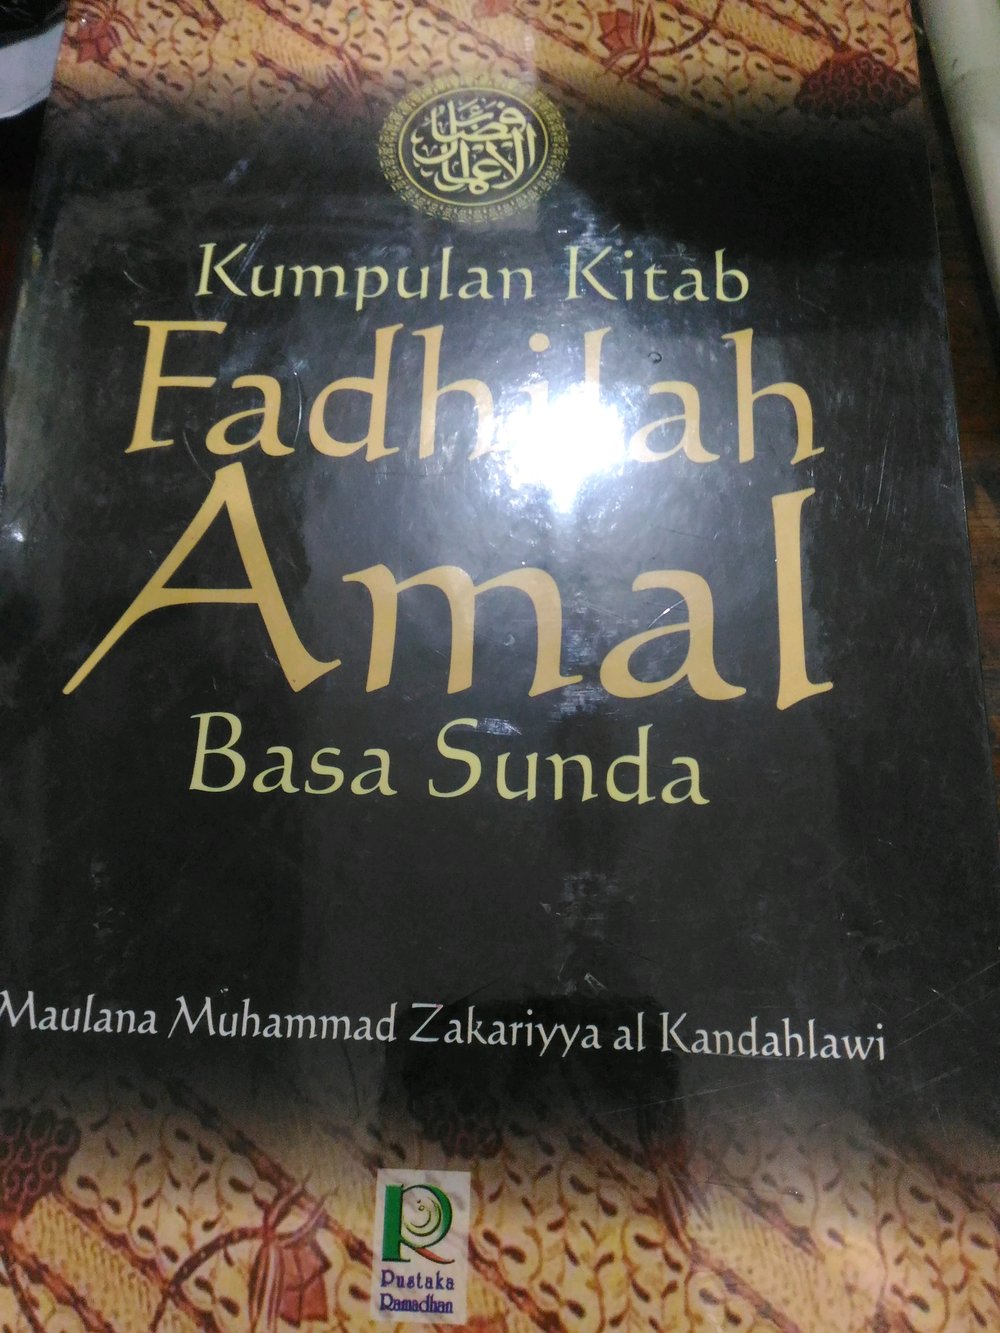 Kumpulan Kitab Sunda